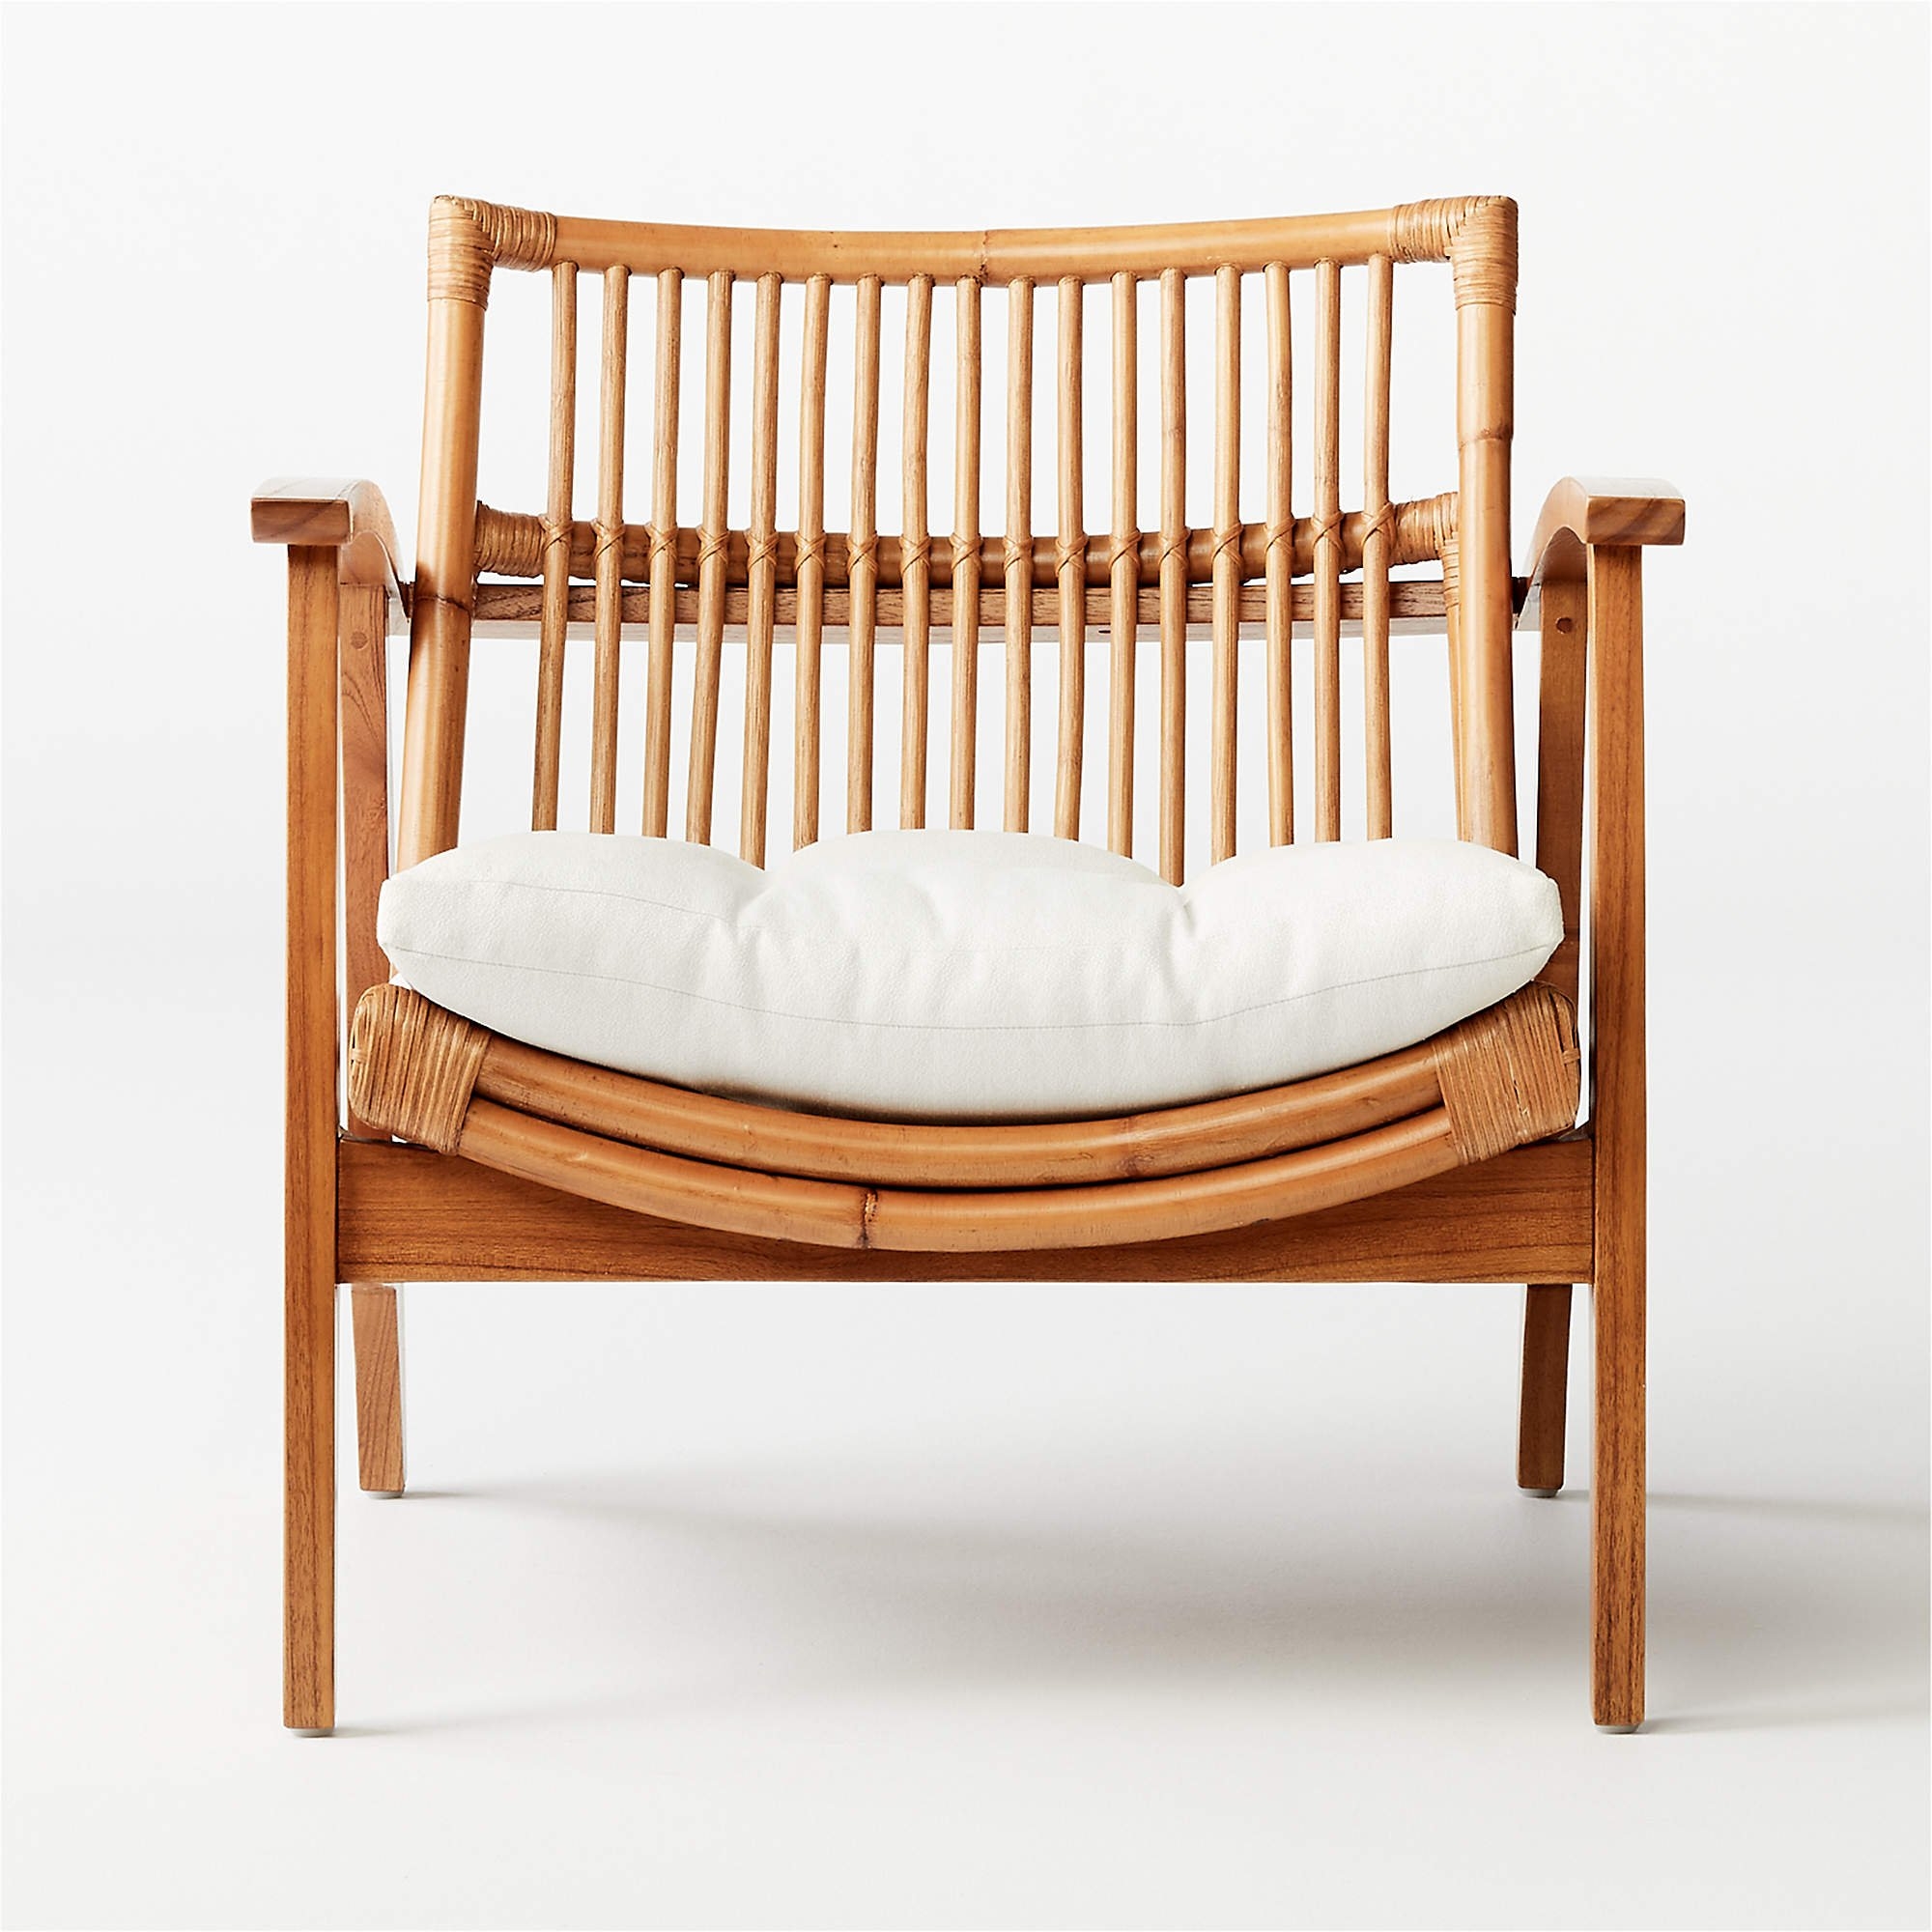 Noelie Rattan Lounge Chair with White Cushion, Mikkeli White - Image 0